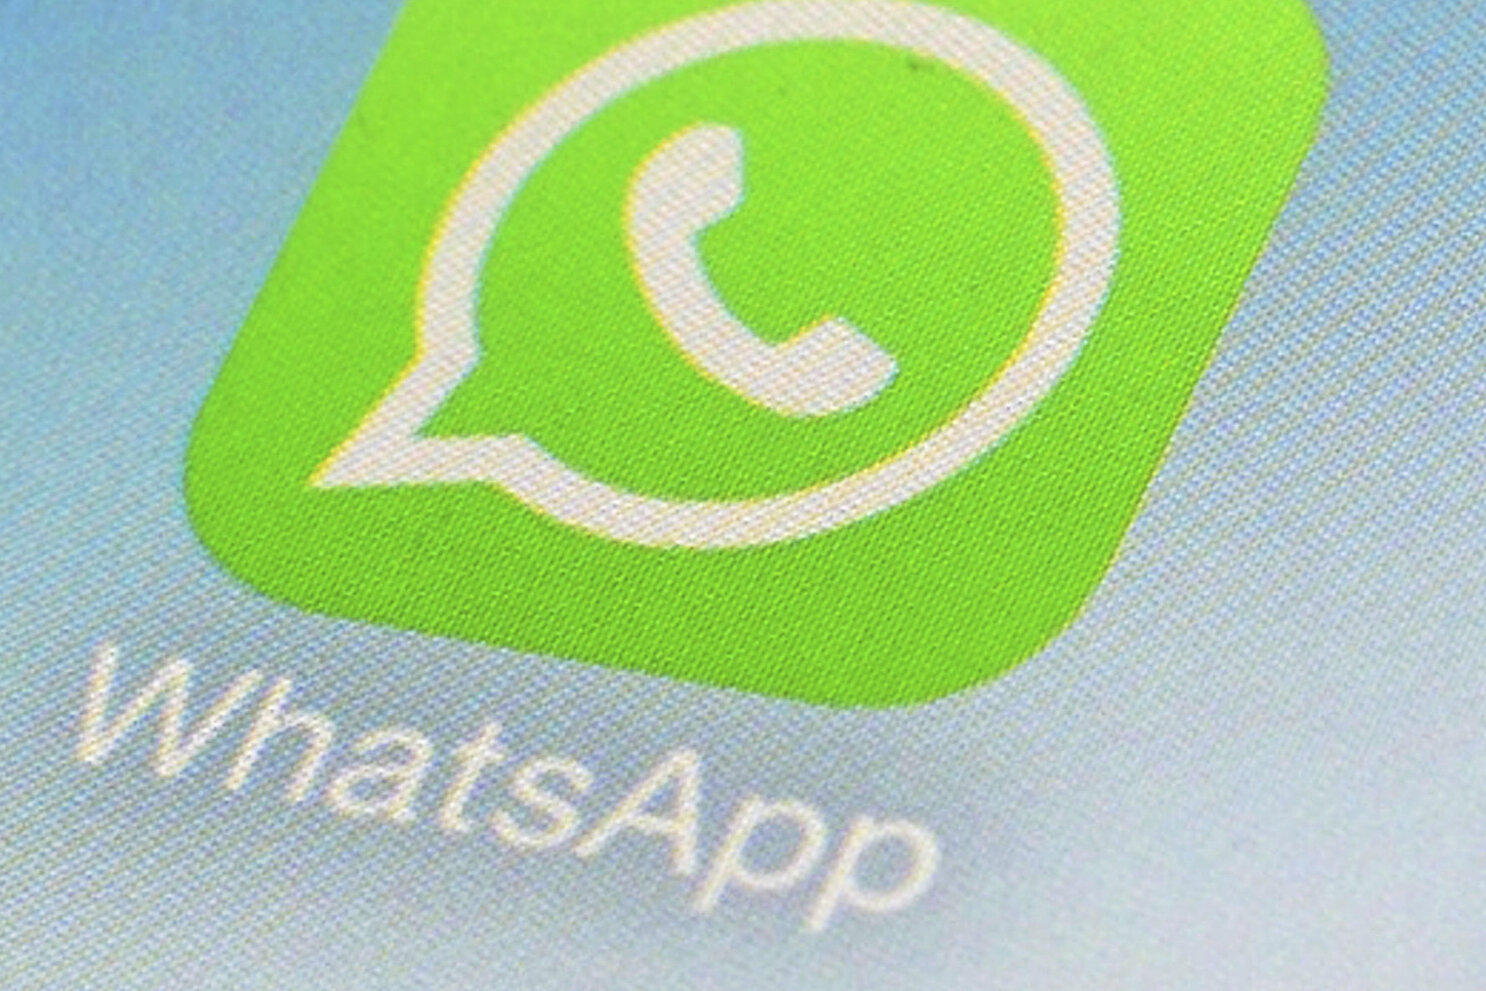 Ireland’s WhatsApp penalty highlights EU privacy turmoil